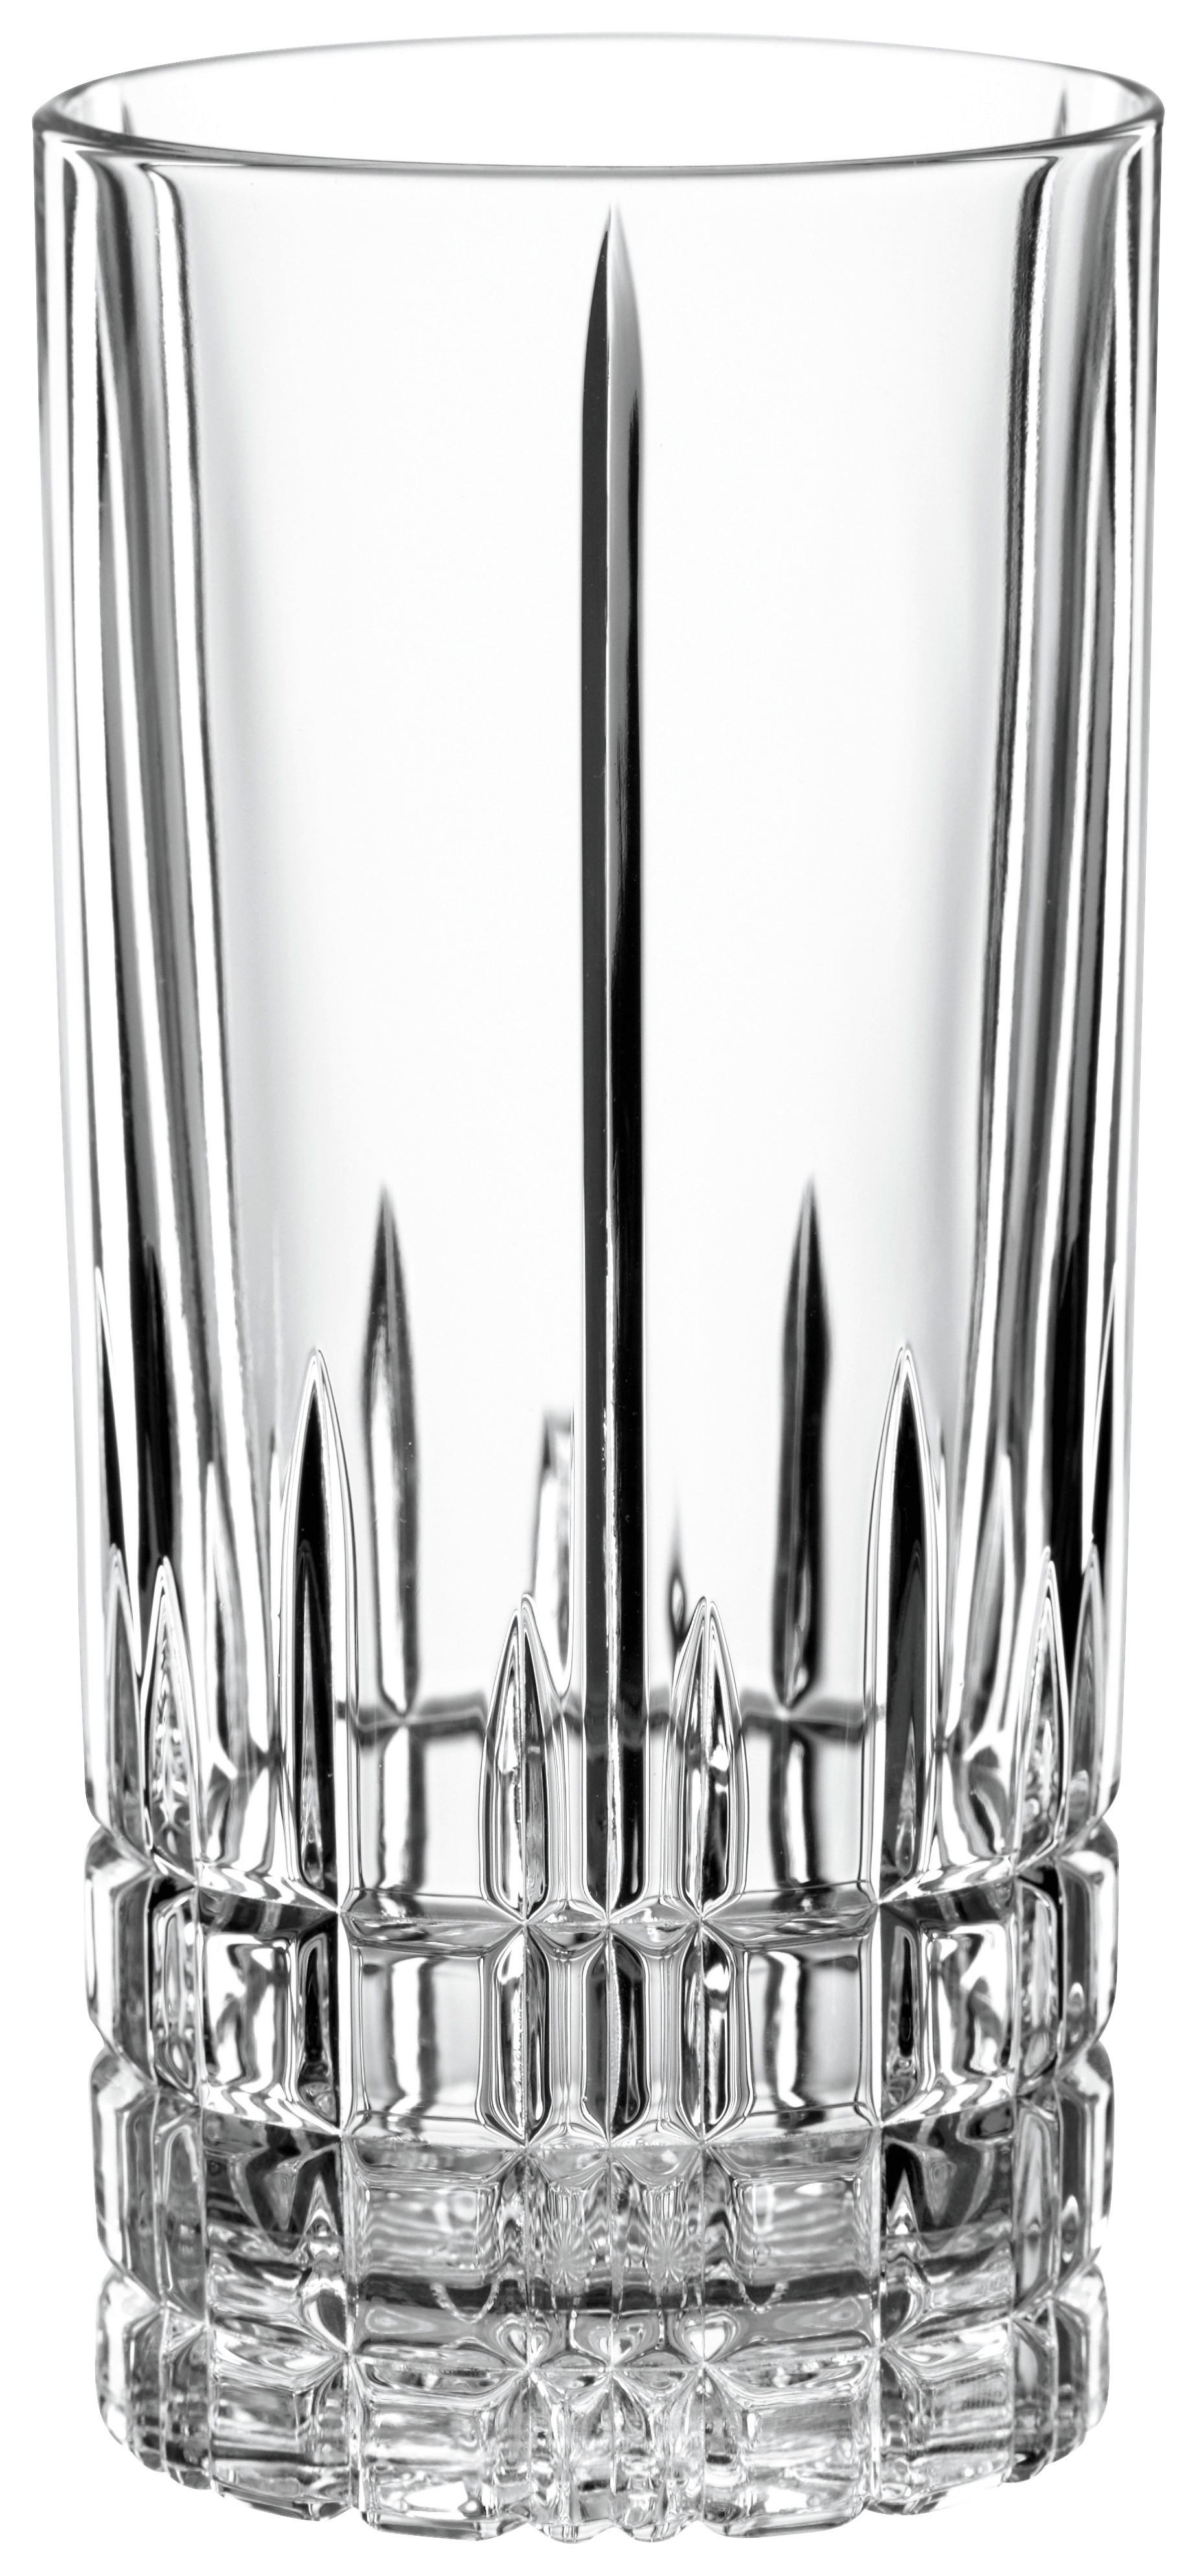 Gläserset Perfect Serve, 4-teilig - Klar, MODERN, Glas (7,1/15,0/7,1cm) - Spiegelau